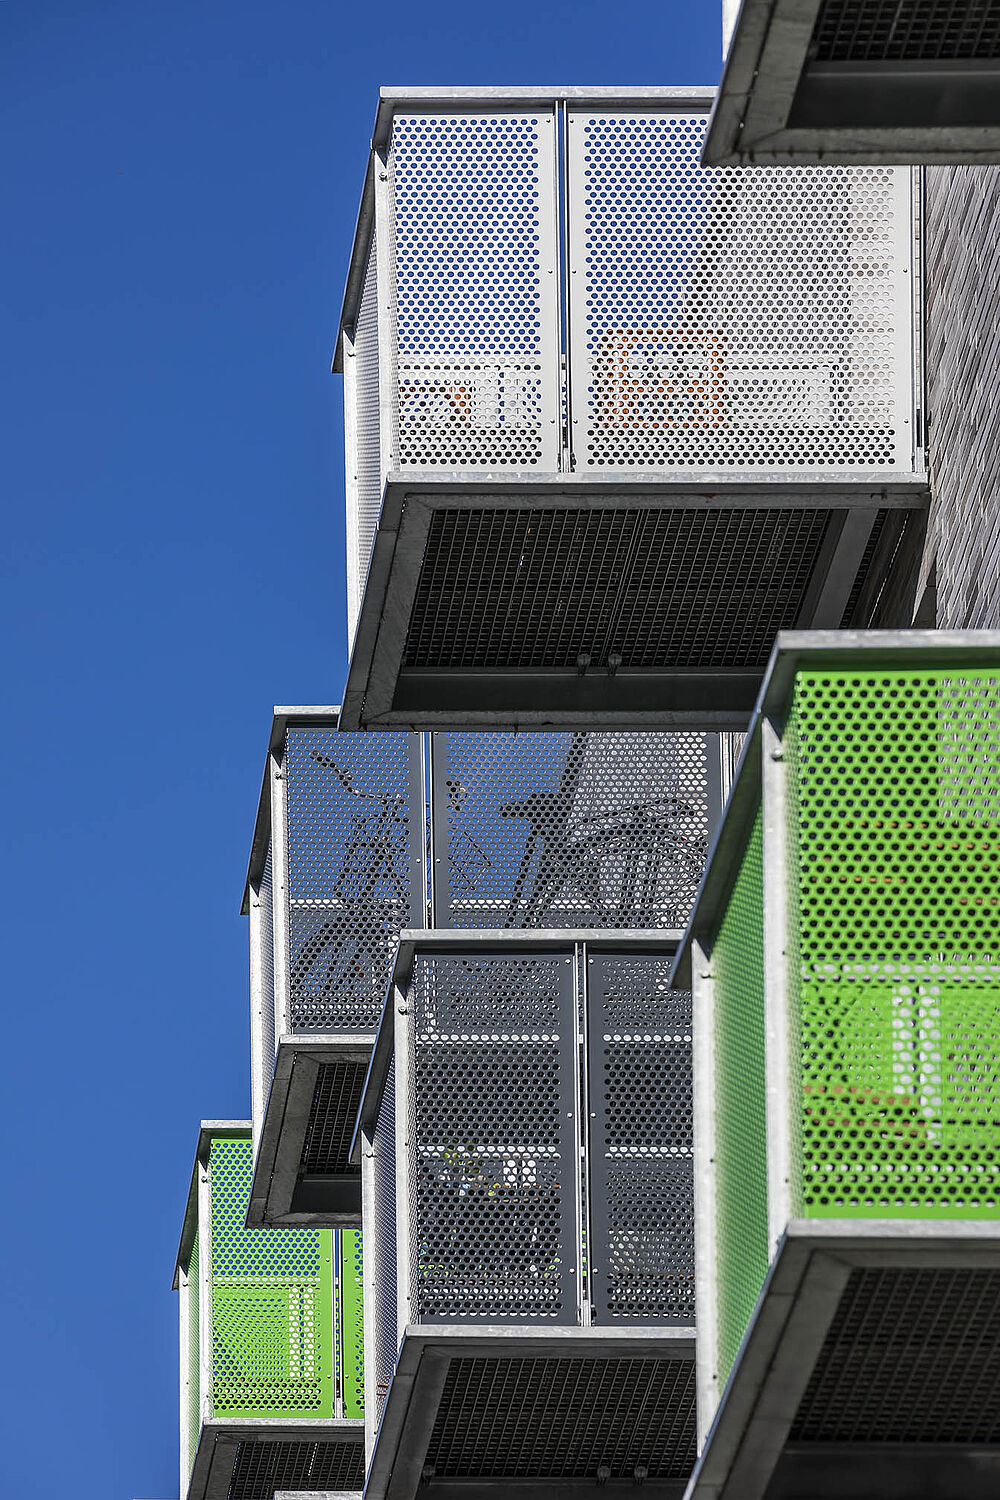 New construction of 111 micro apartments by Düsseldorf architect firm greeen! architects at Merziger Strasse in Düsseldorf